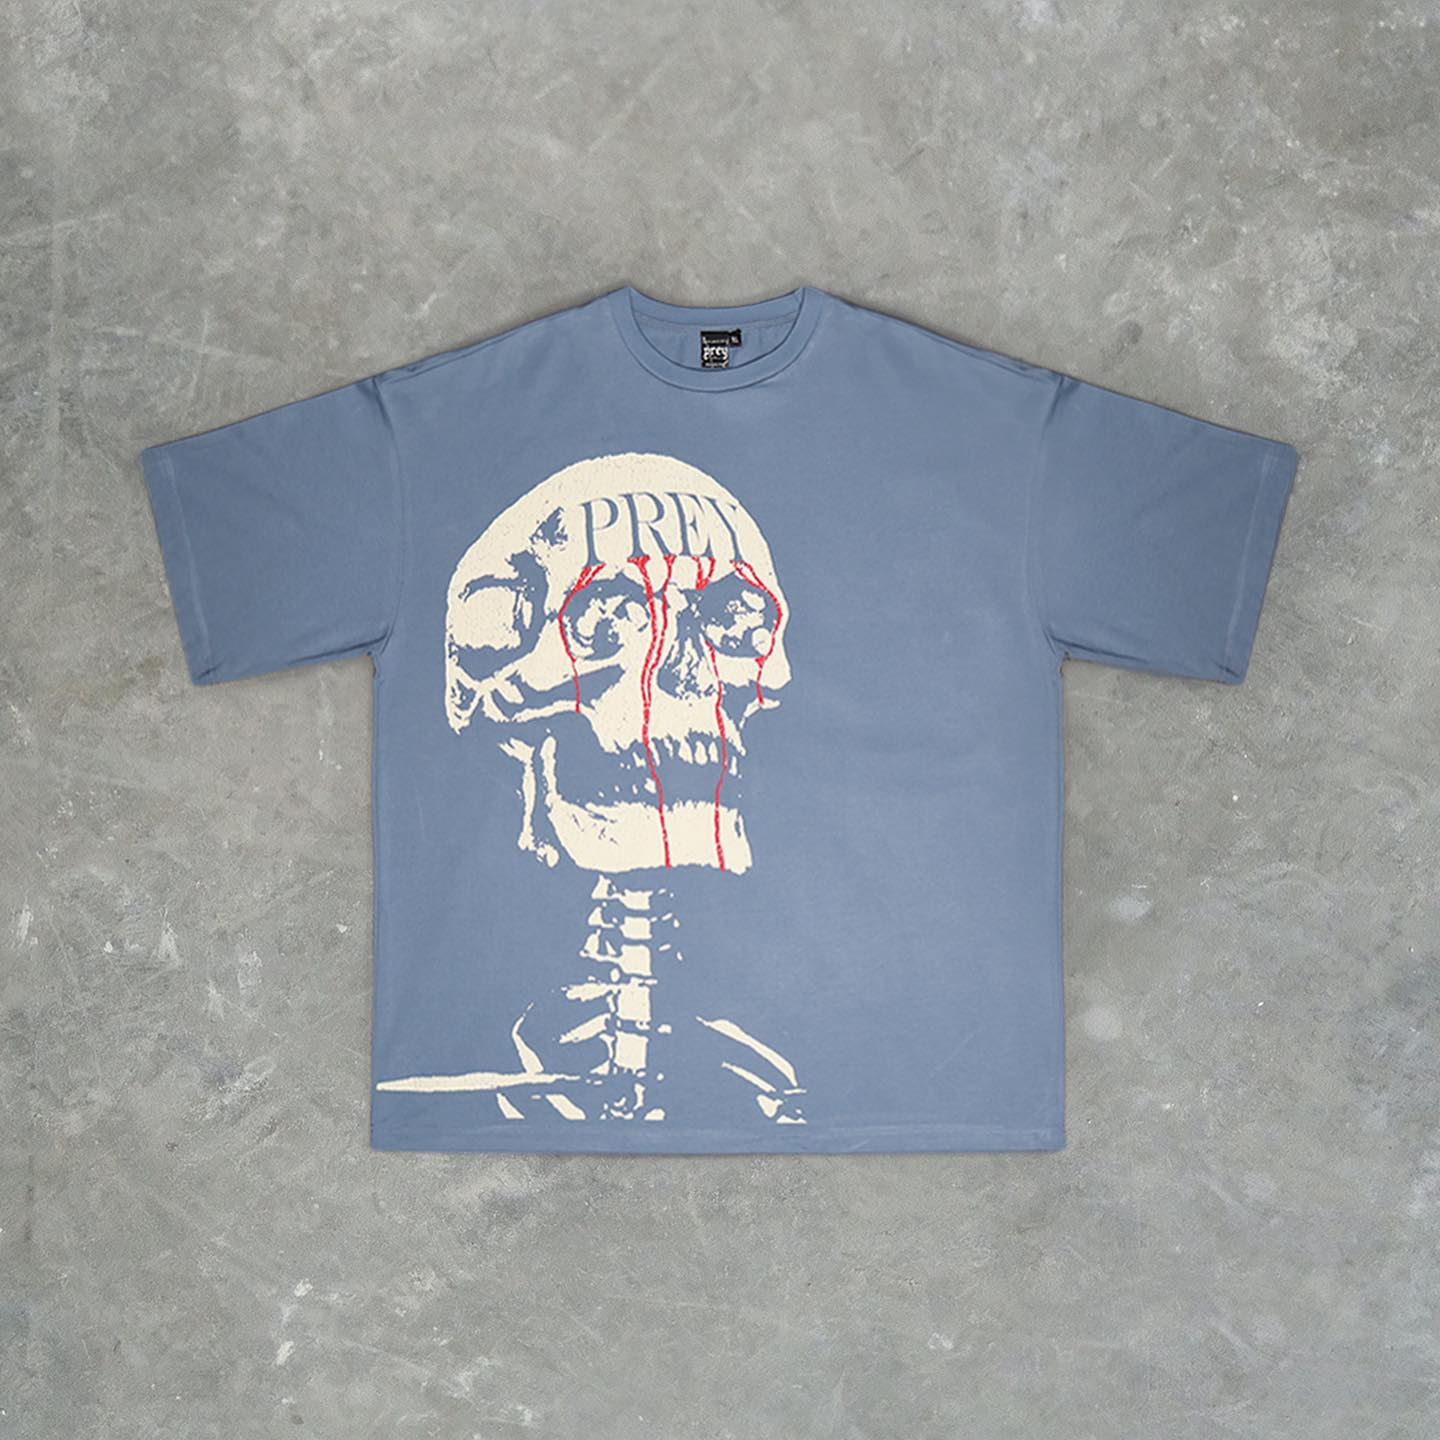 Skull fashion print T-shirt